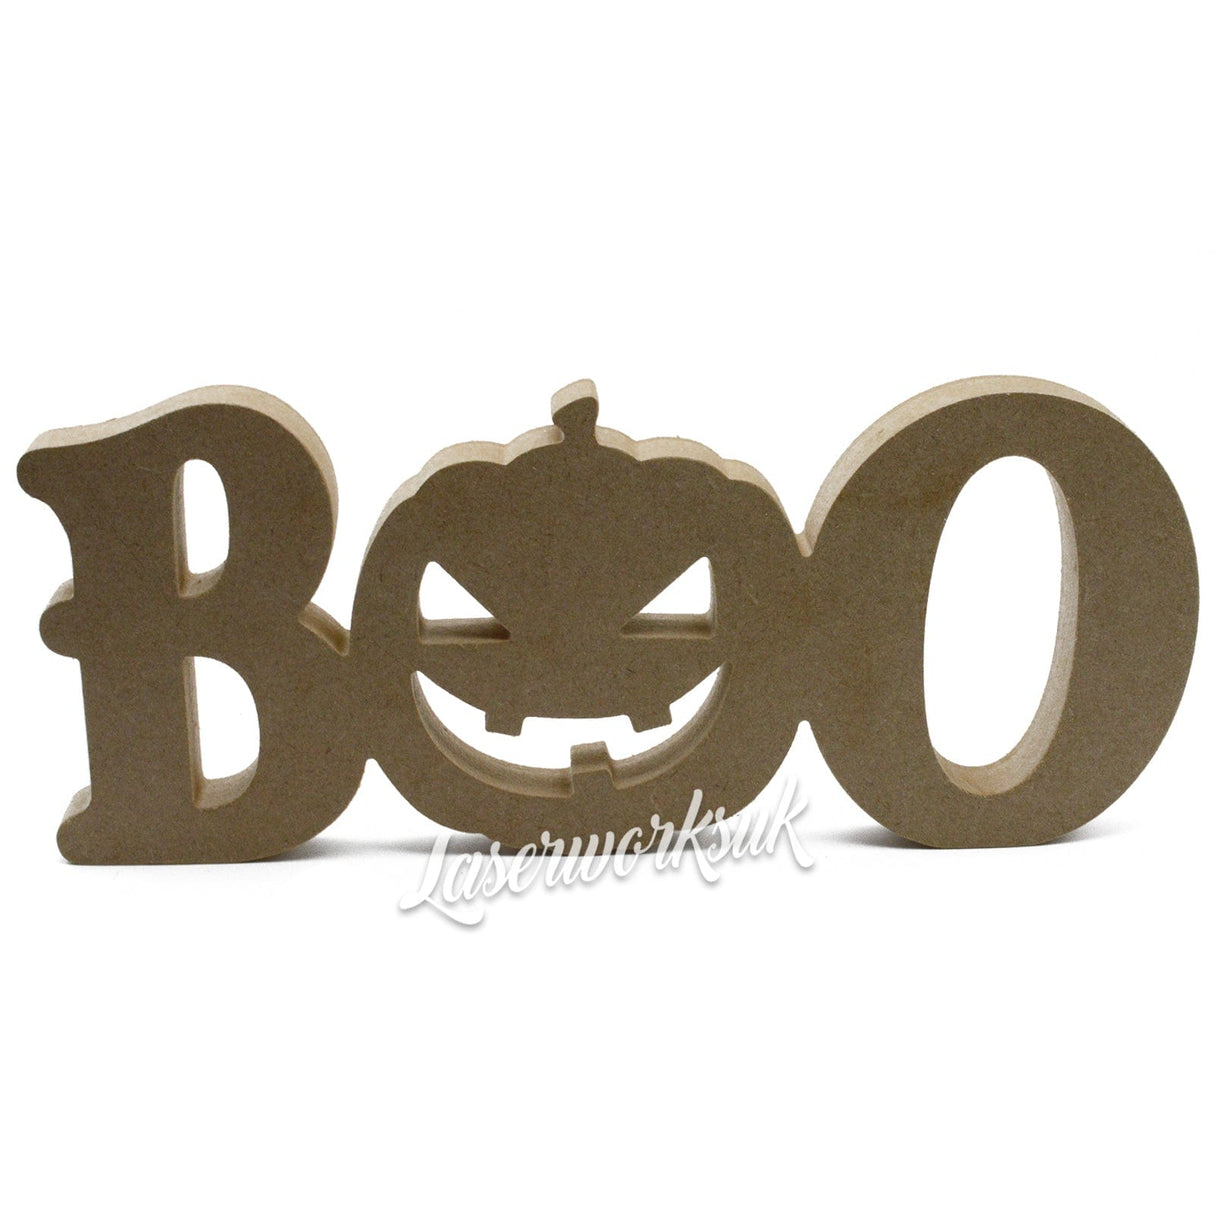 Freestanding Word Boo - Halloween Craft Sign - Laserworksuk